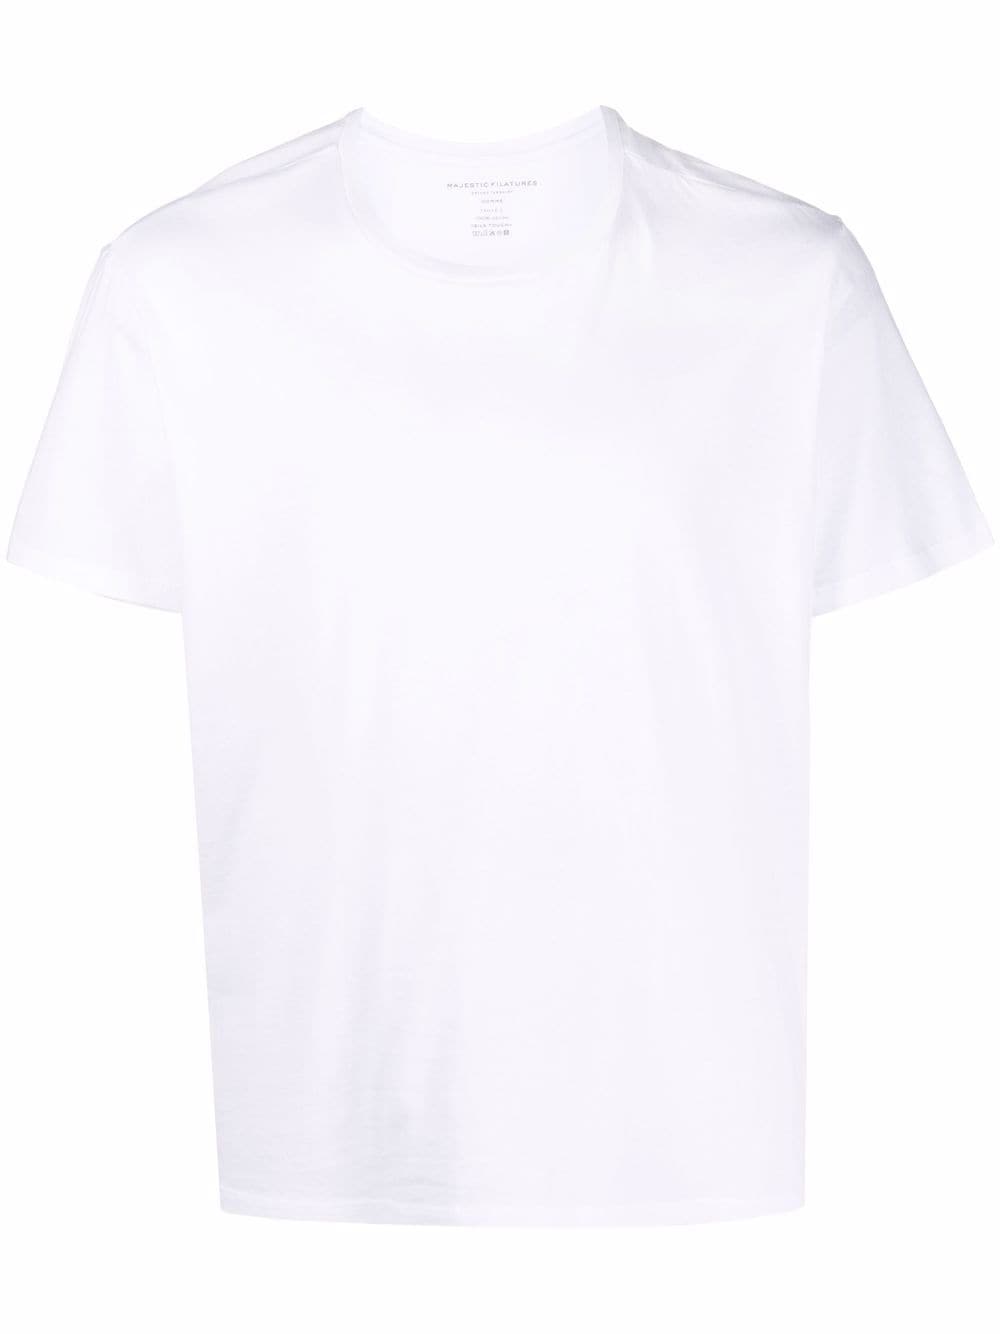 Majestic Filatures short-sleeve cotton T-shirt - White von Majestic Filatures